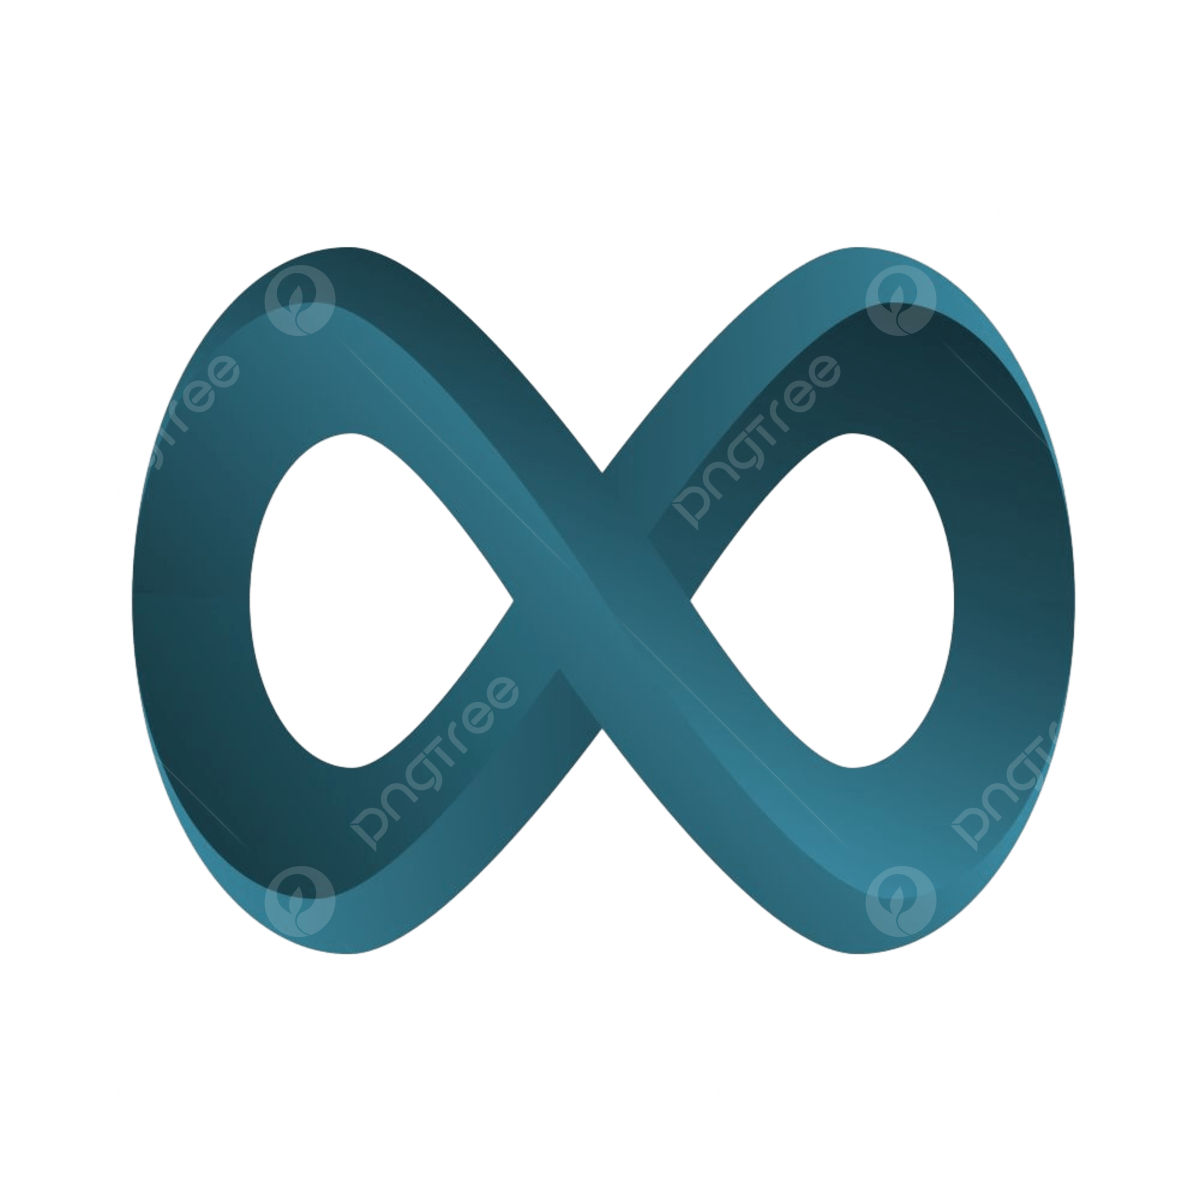 Elegant Infinity Symbol PNG Image File